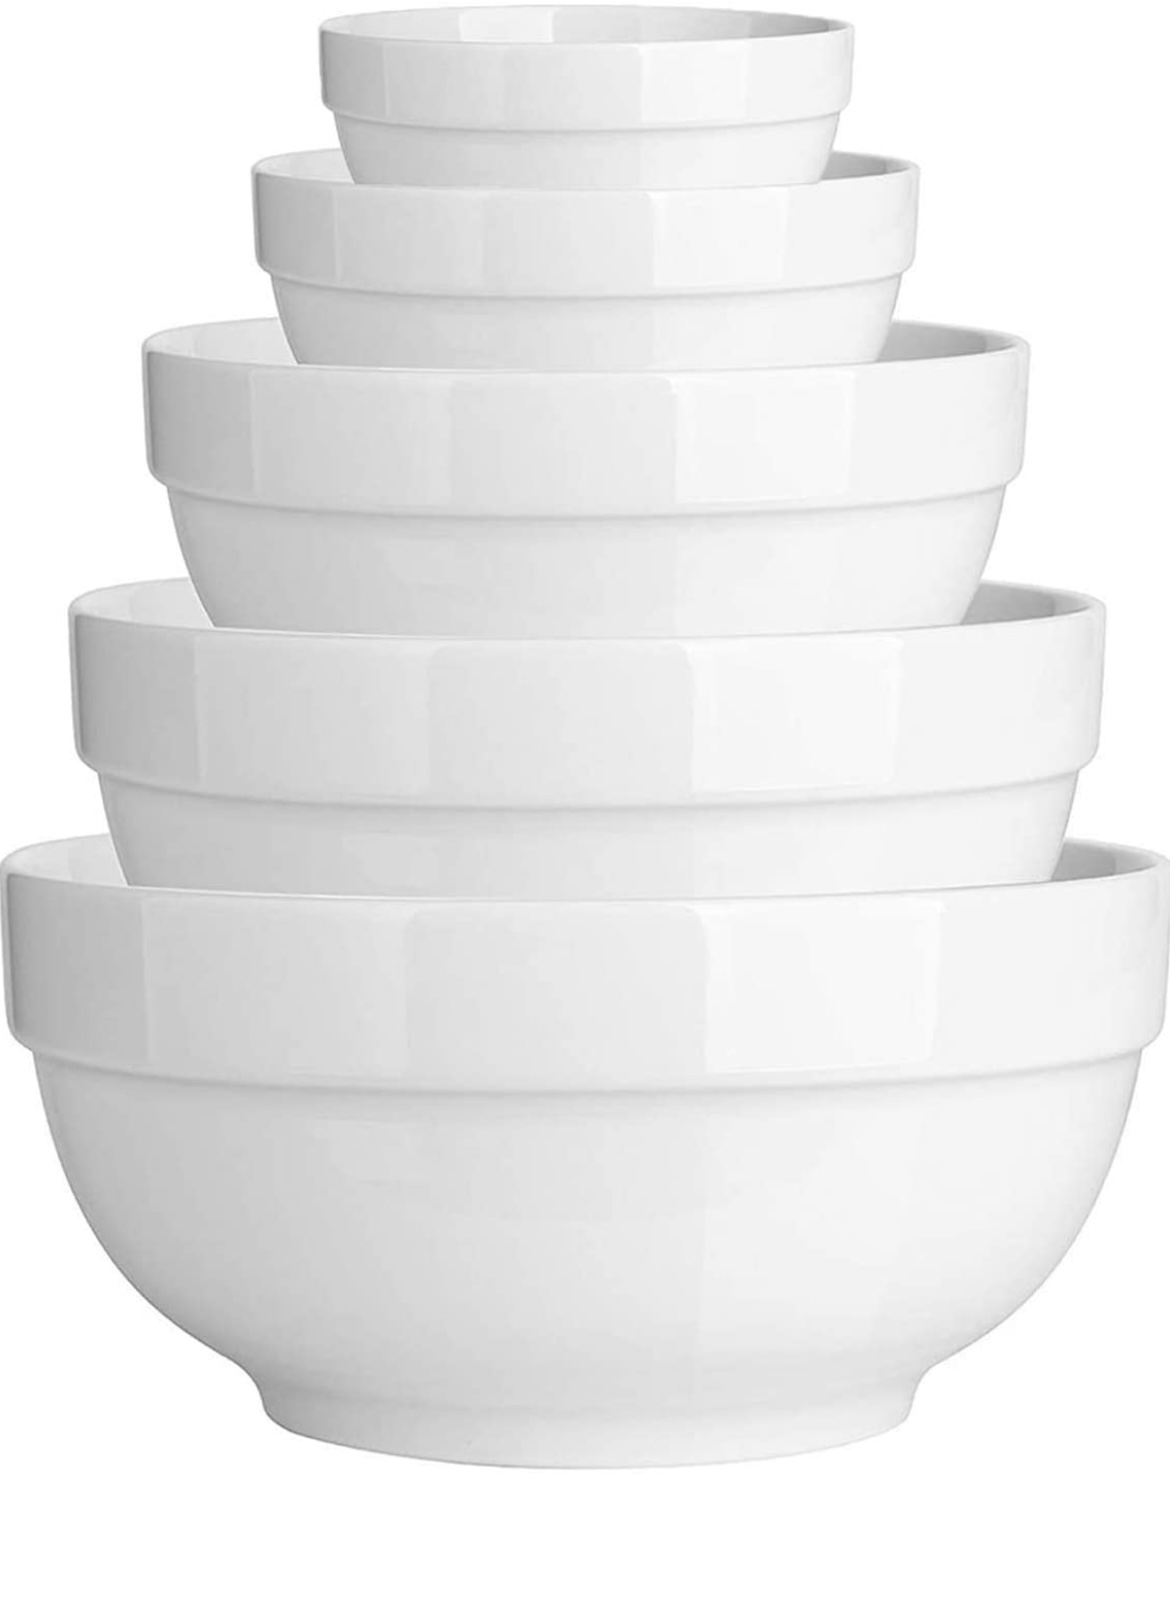 White mixing bowls